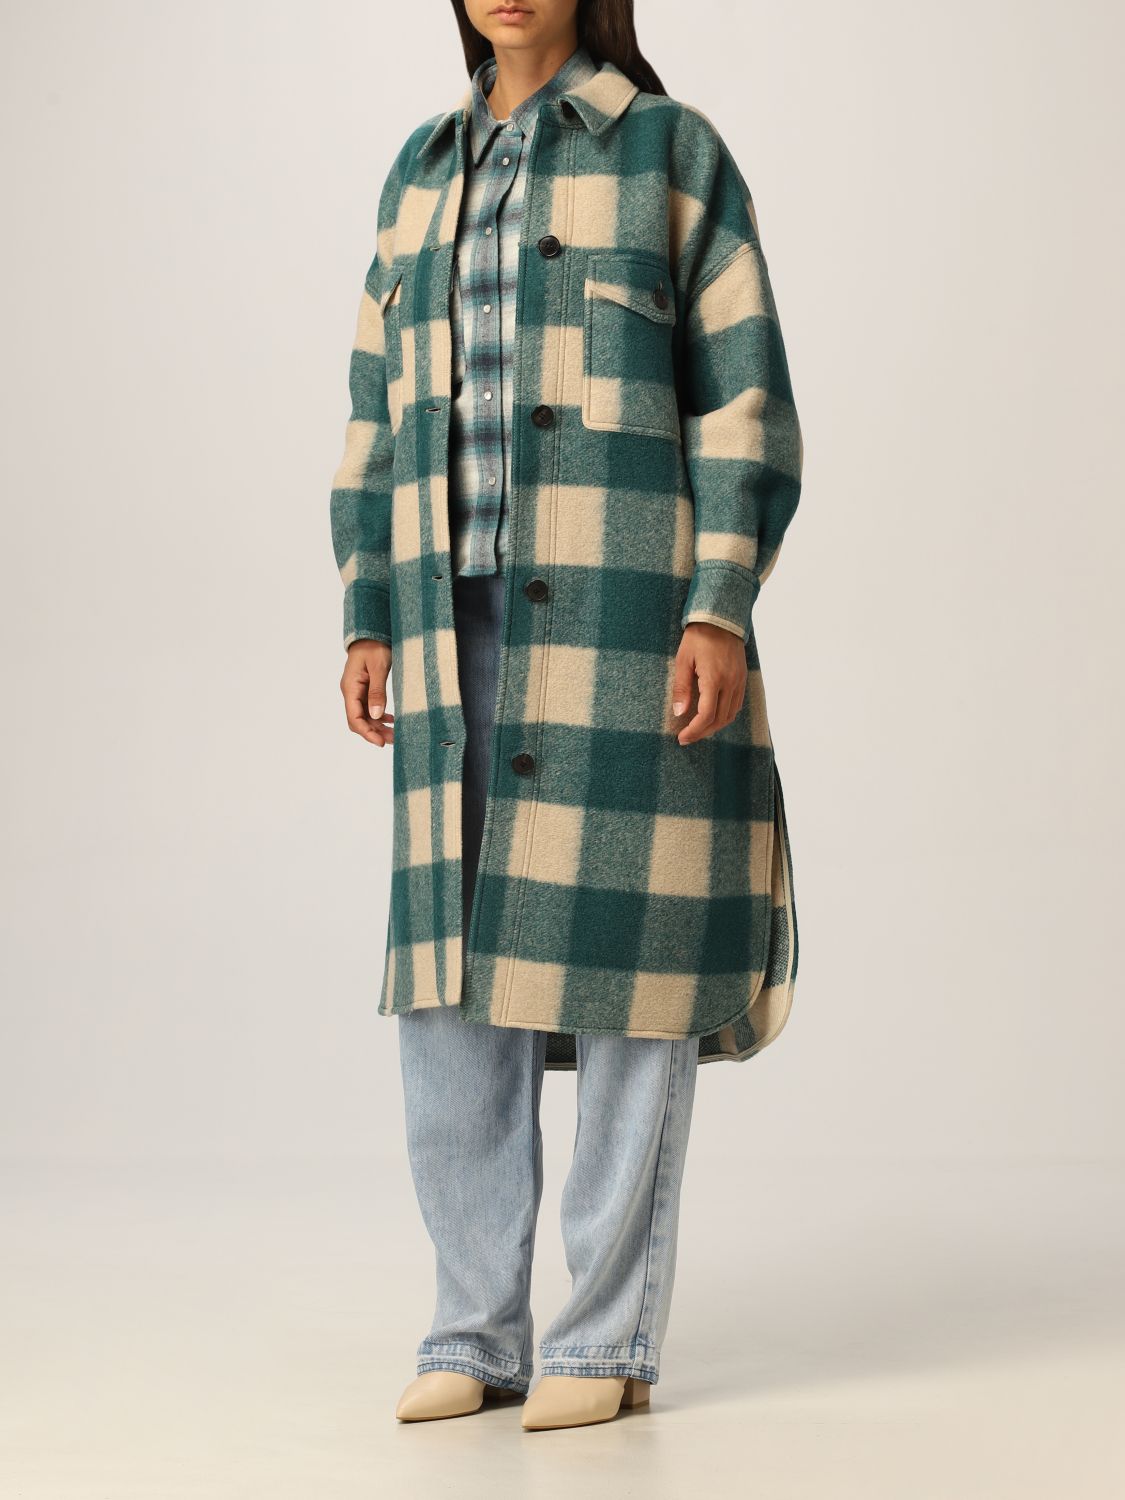 ISABEL MARANT ETOILE: coat in check wool blend - Green | Isabel Marant Etoile coat MA098521A009E online at GIGLIO.COM